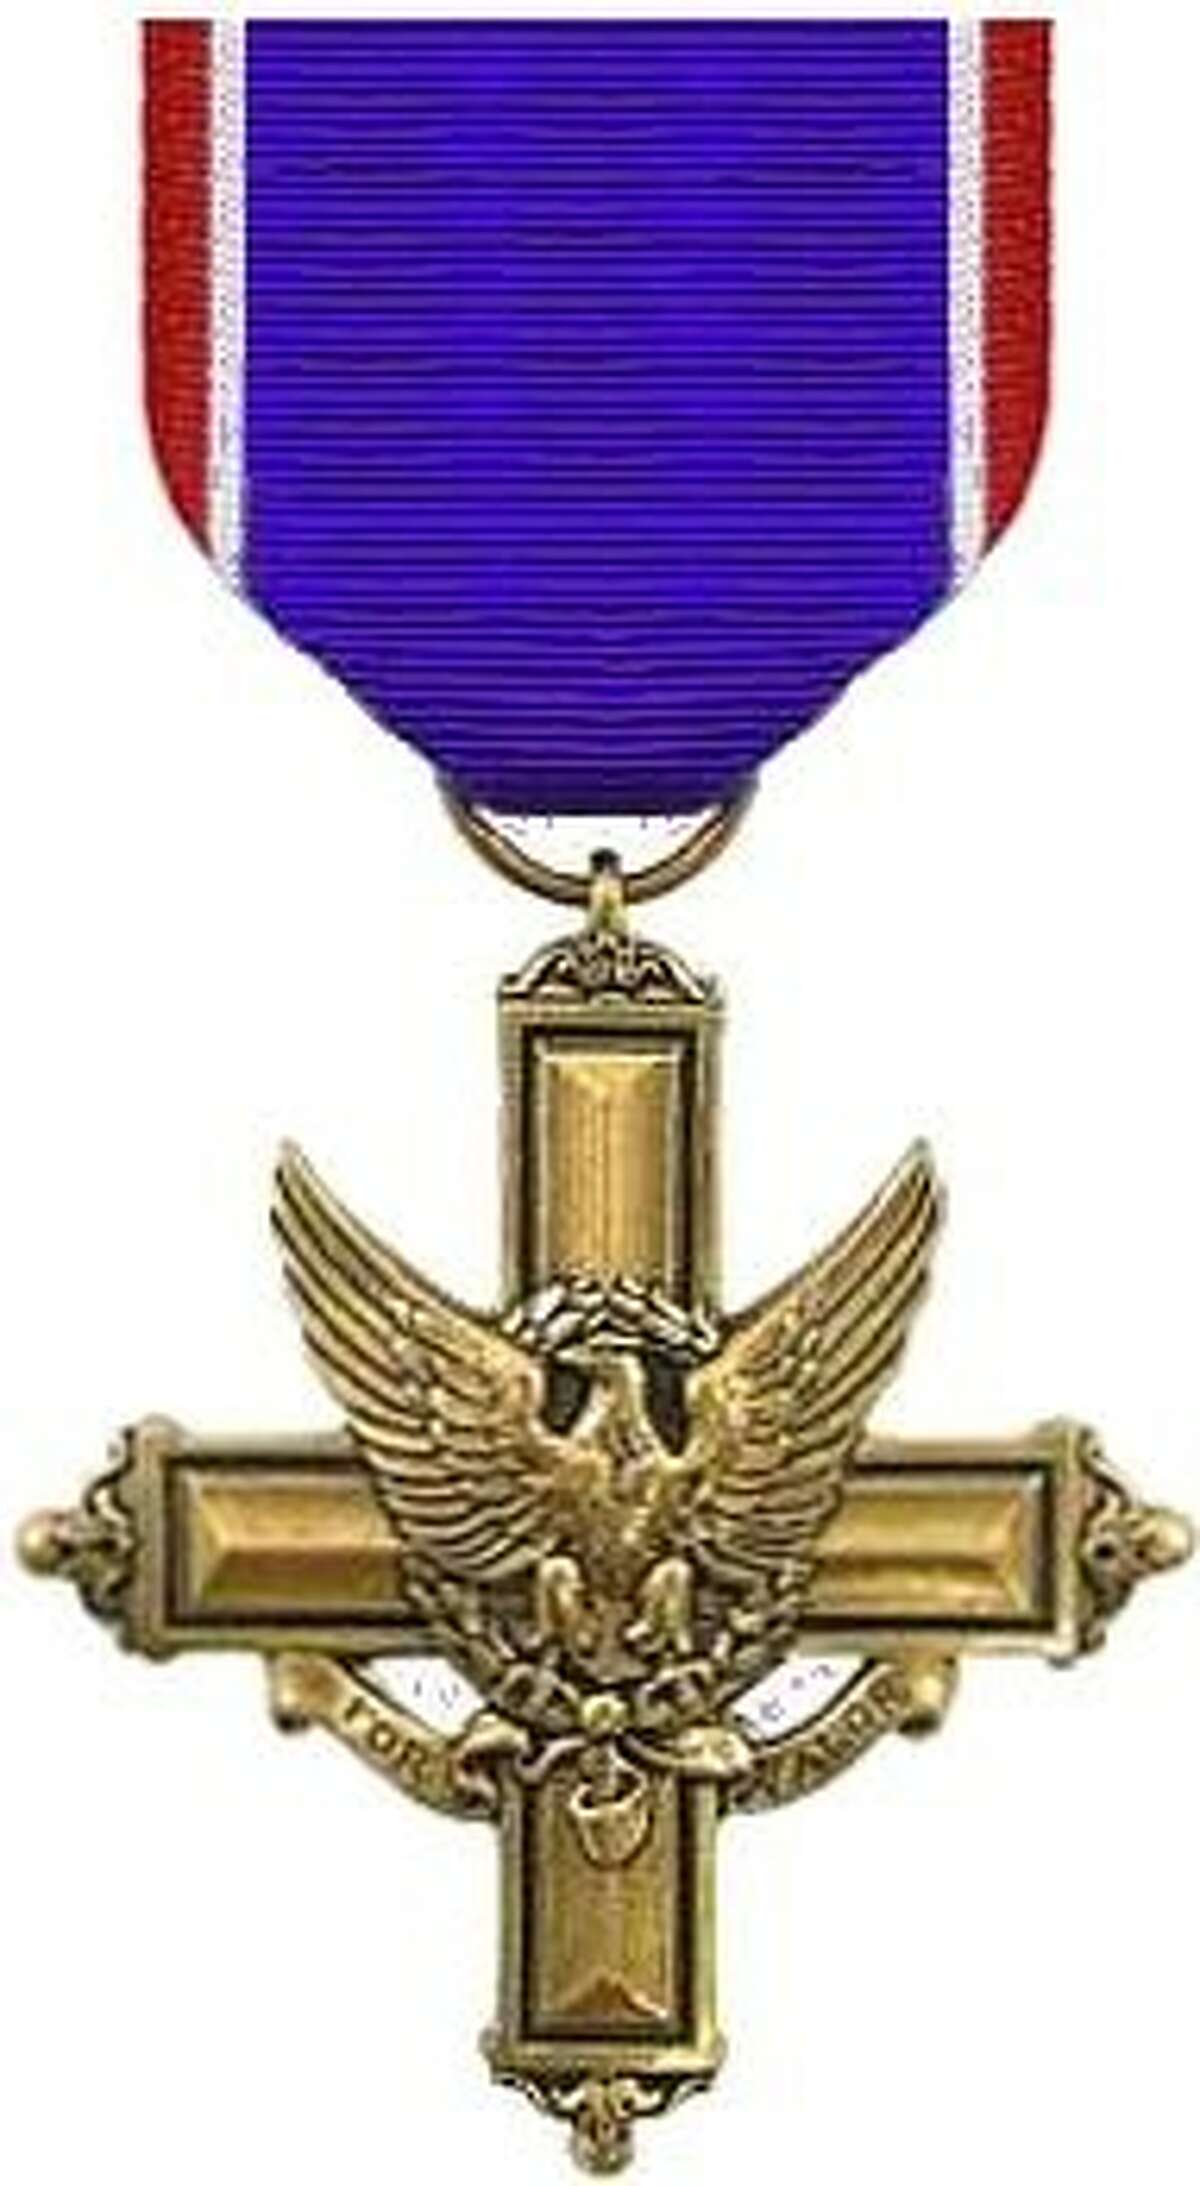  Distinguished Service Cross